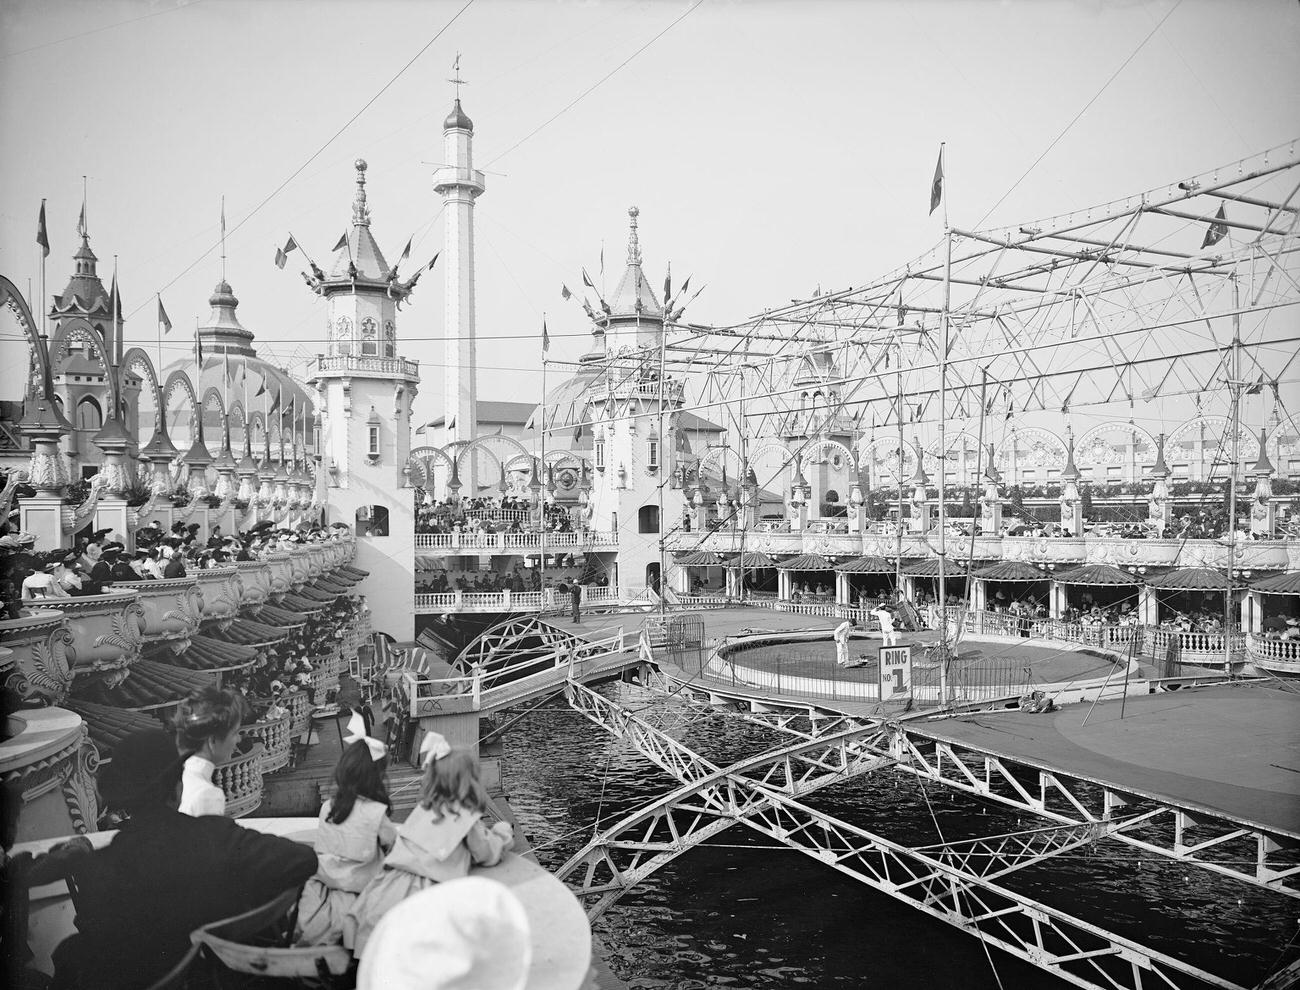 Luna Park In Coney Island, Circa 1905